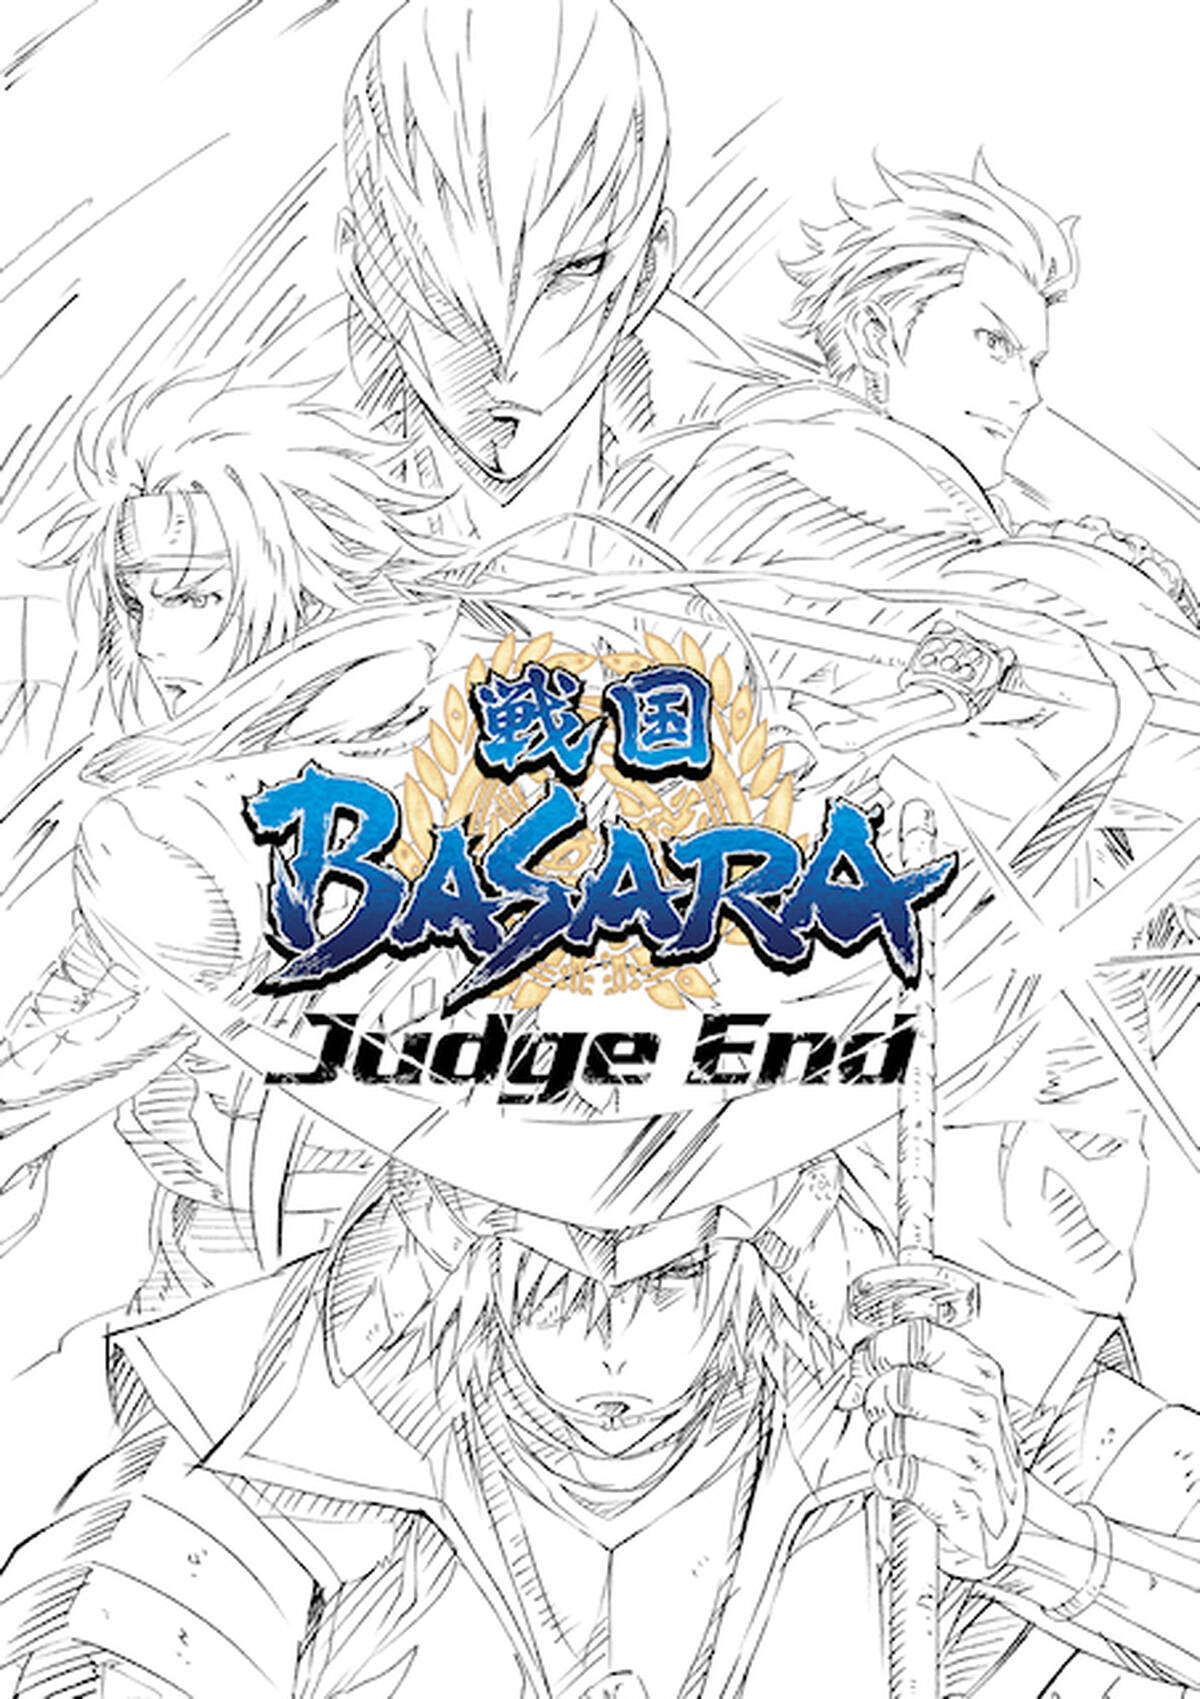 Tvアニメ 戦国basara Judge End 14年内スタート 第3期となる今回は 戦国basara3 がベース アキバ総研